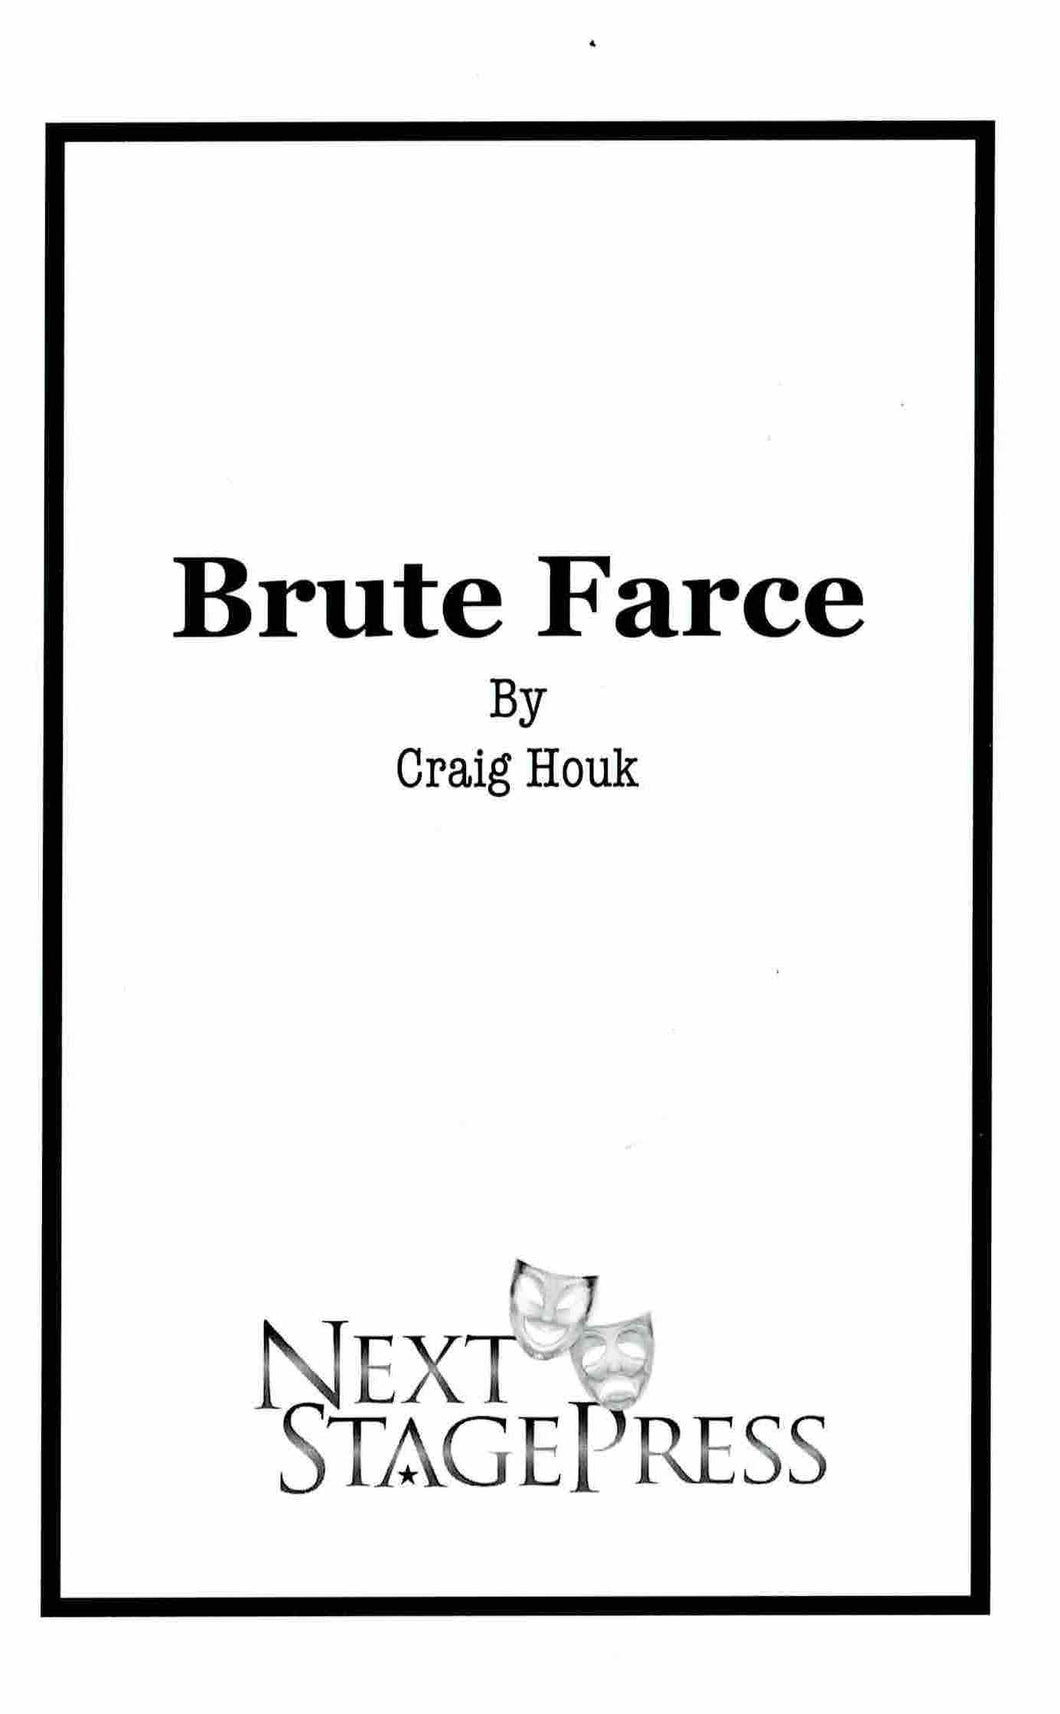 Brute Farce by Craig Houk